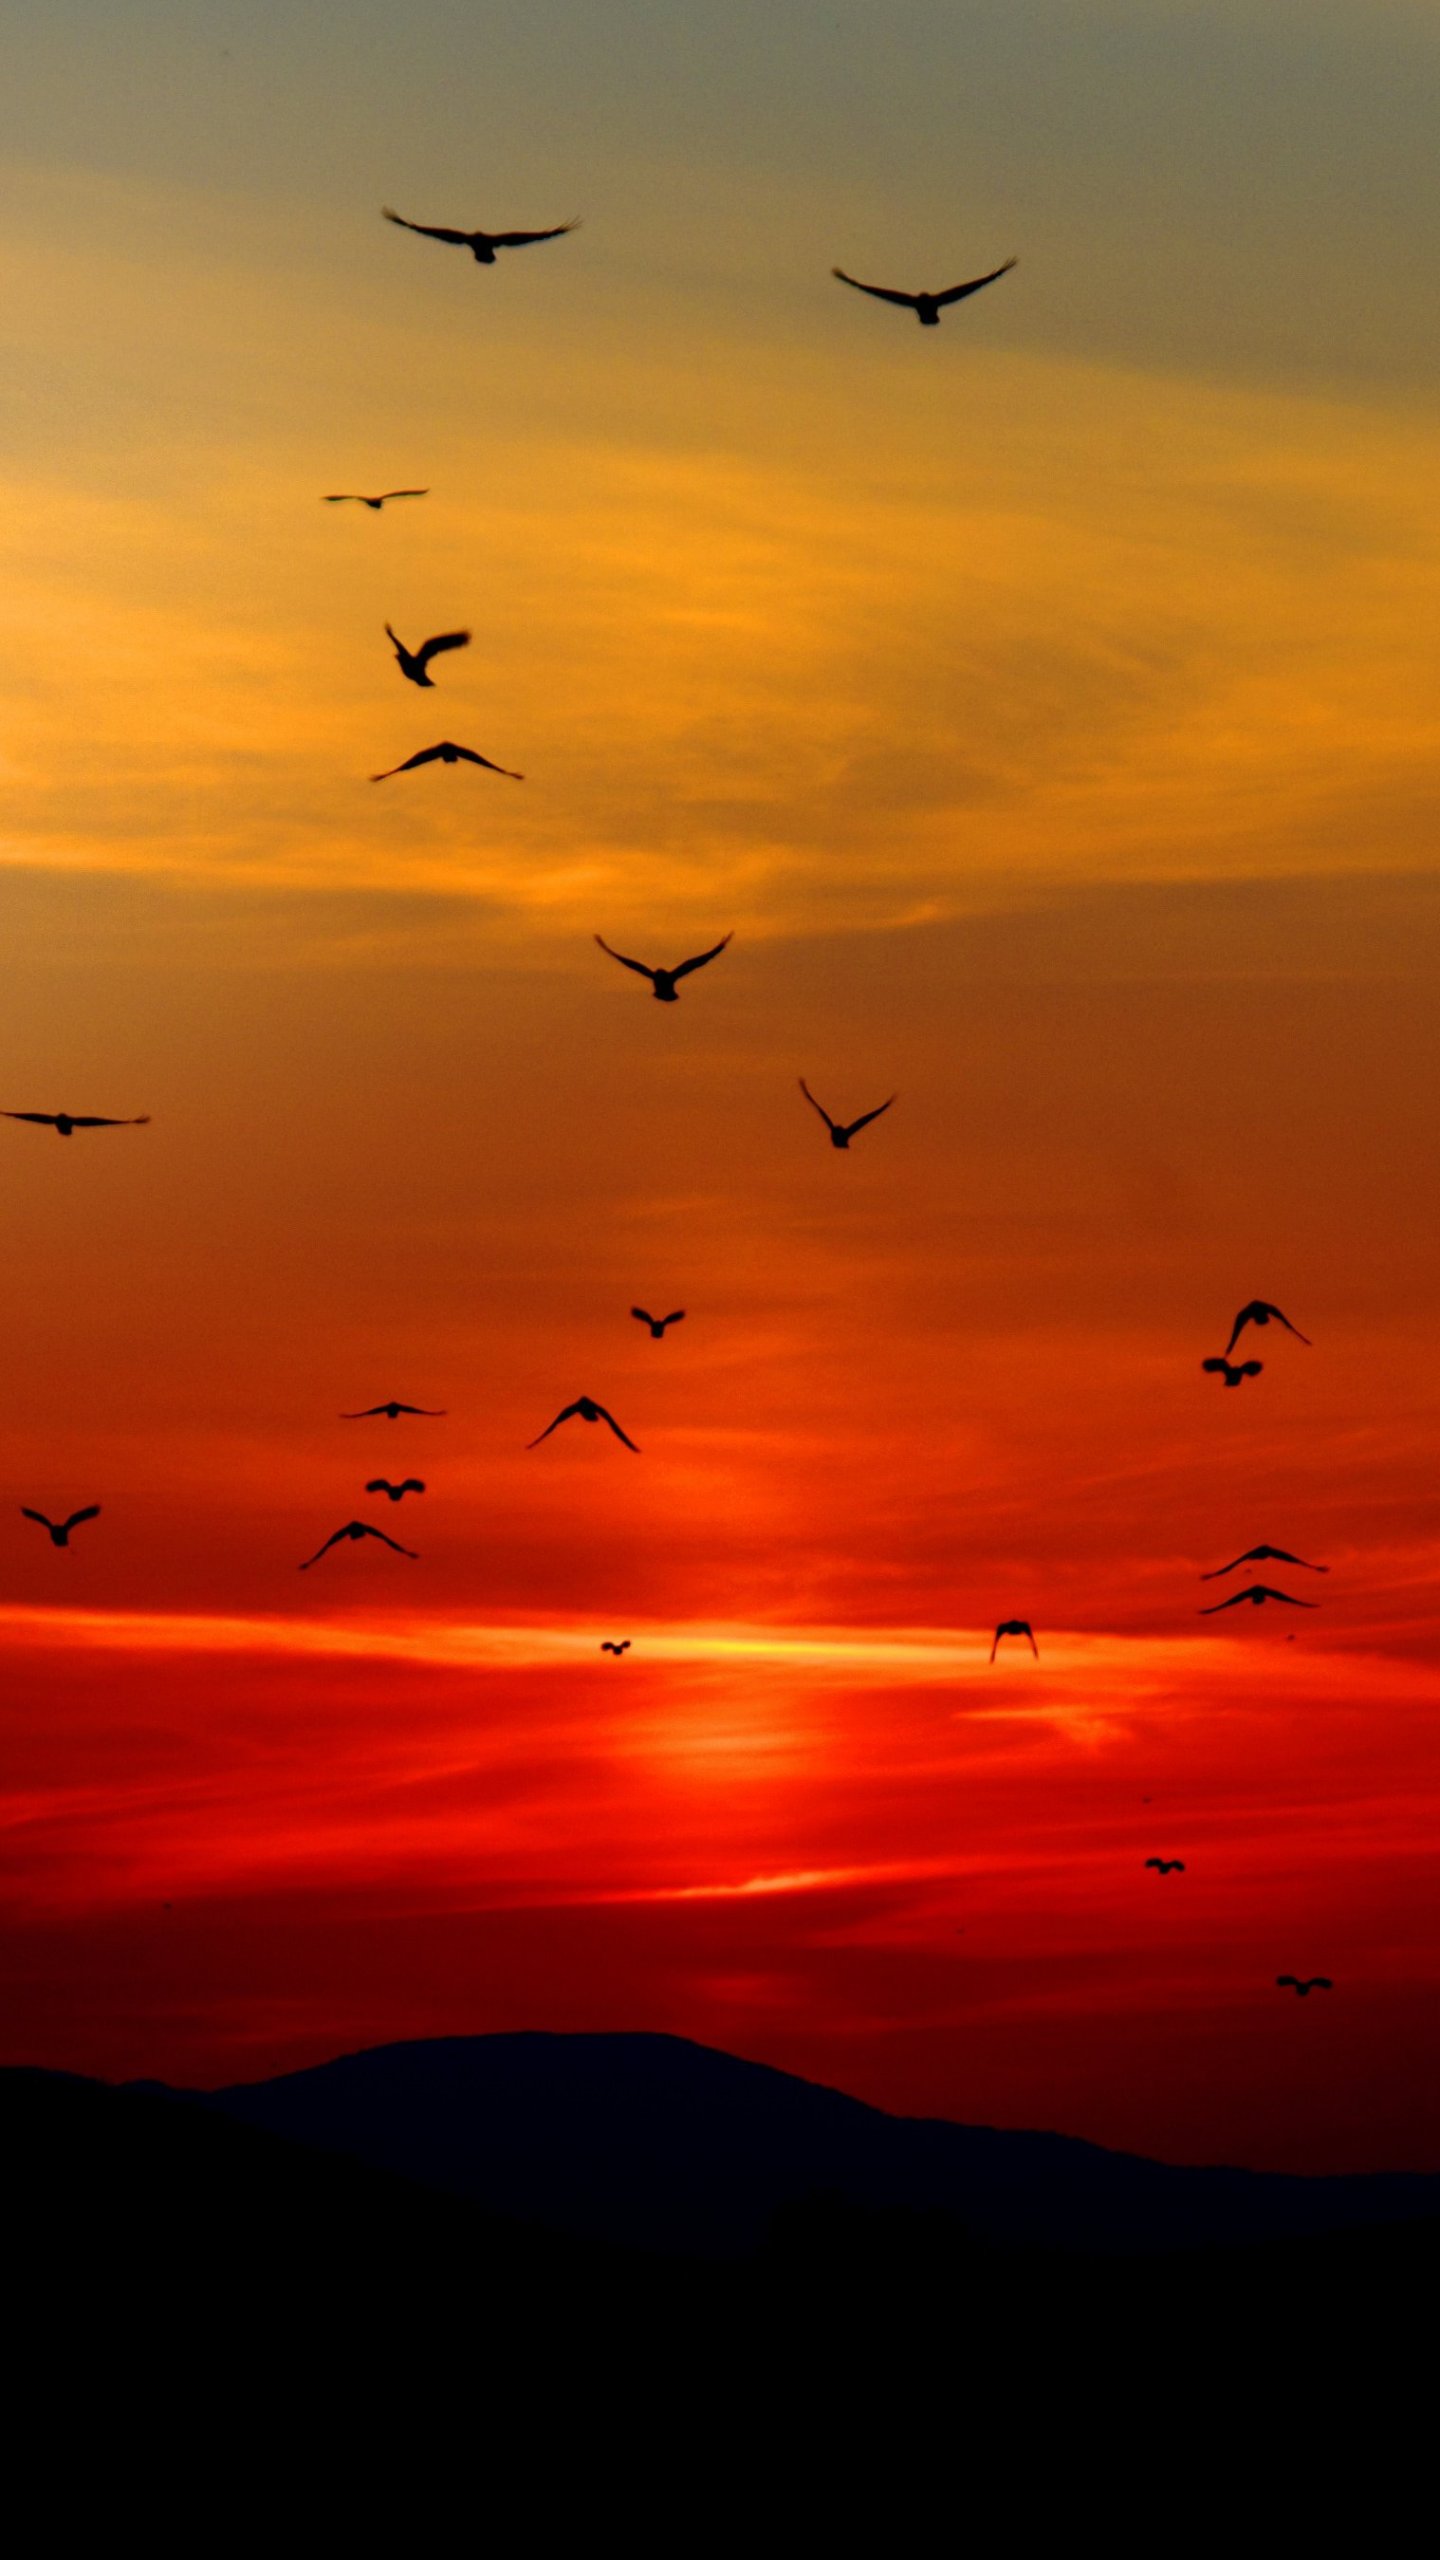 Birds in Sunset Wallpaper   iPhone Android Desktop Backgrounds